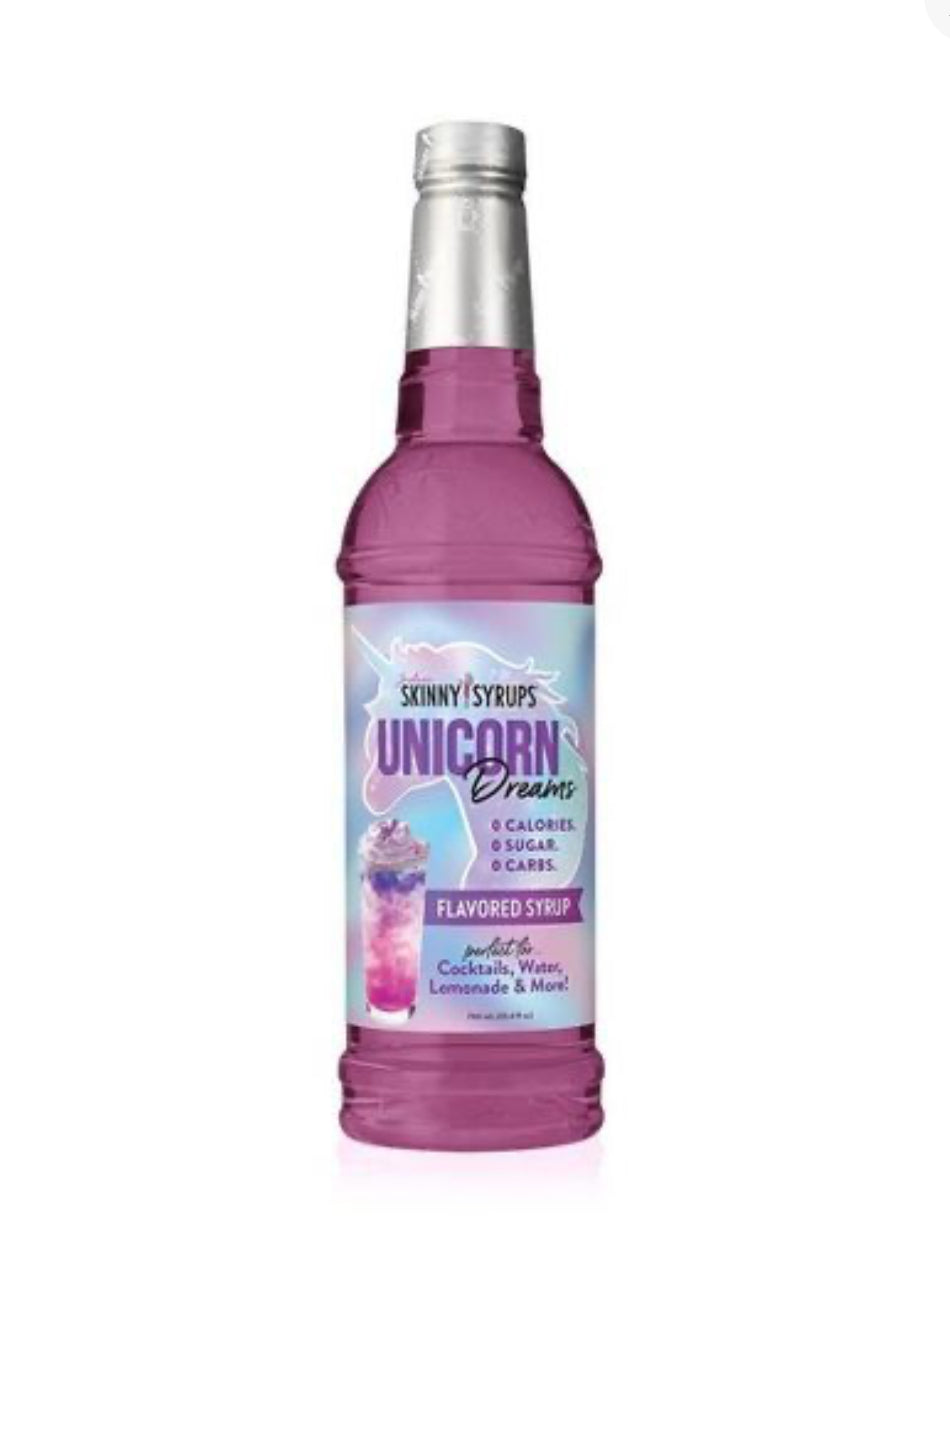 Unicorn Dreams Skinny Syrup